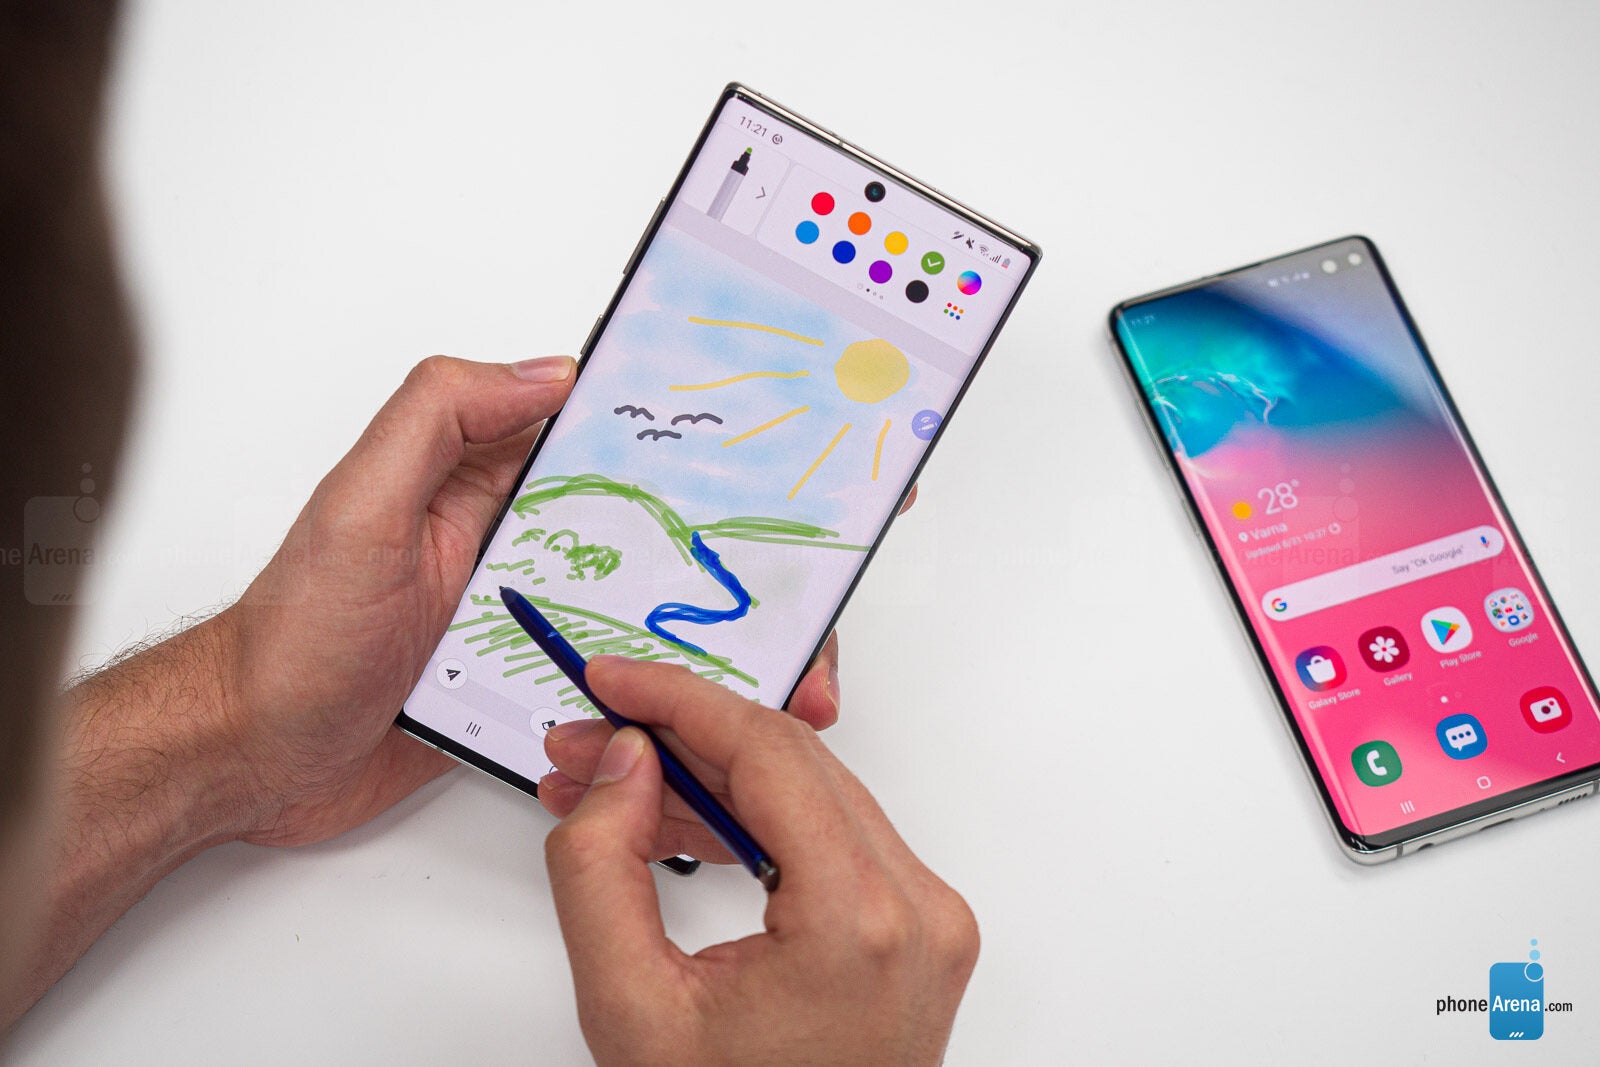 Samsung Galaxy Note 10+ vs Galaxy S10+